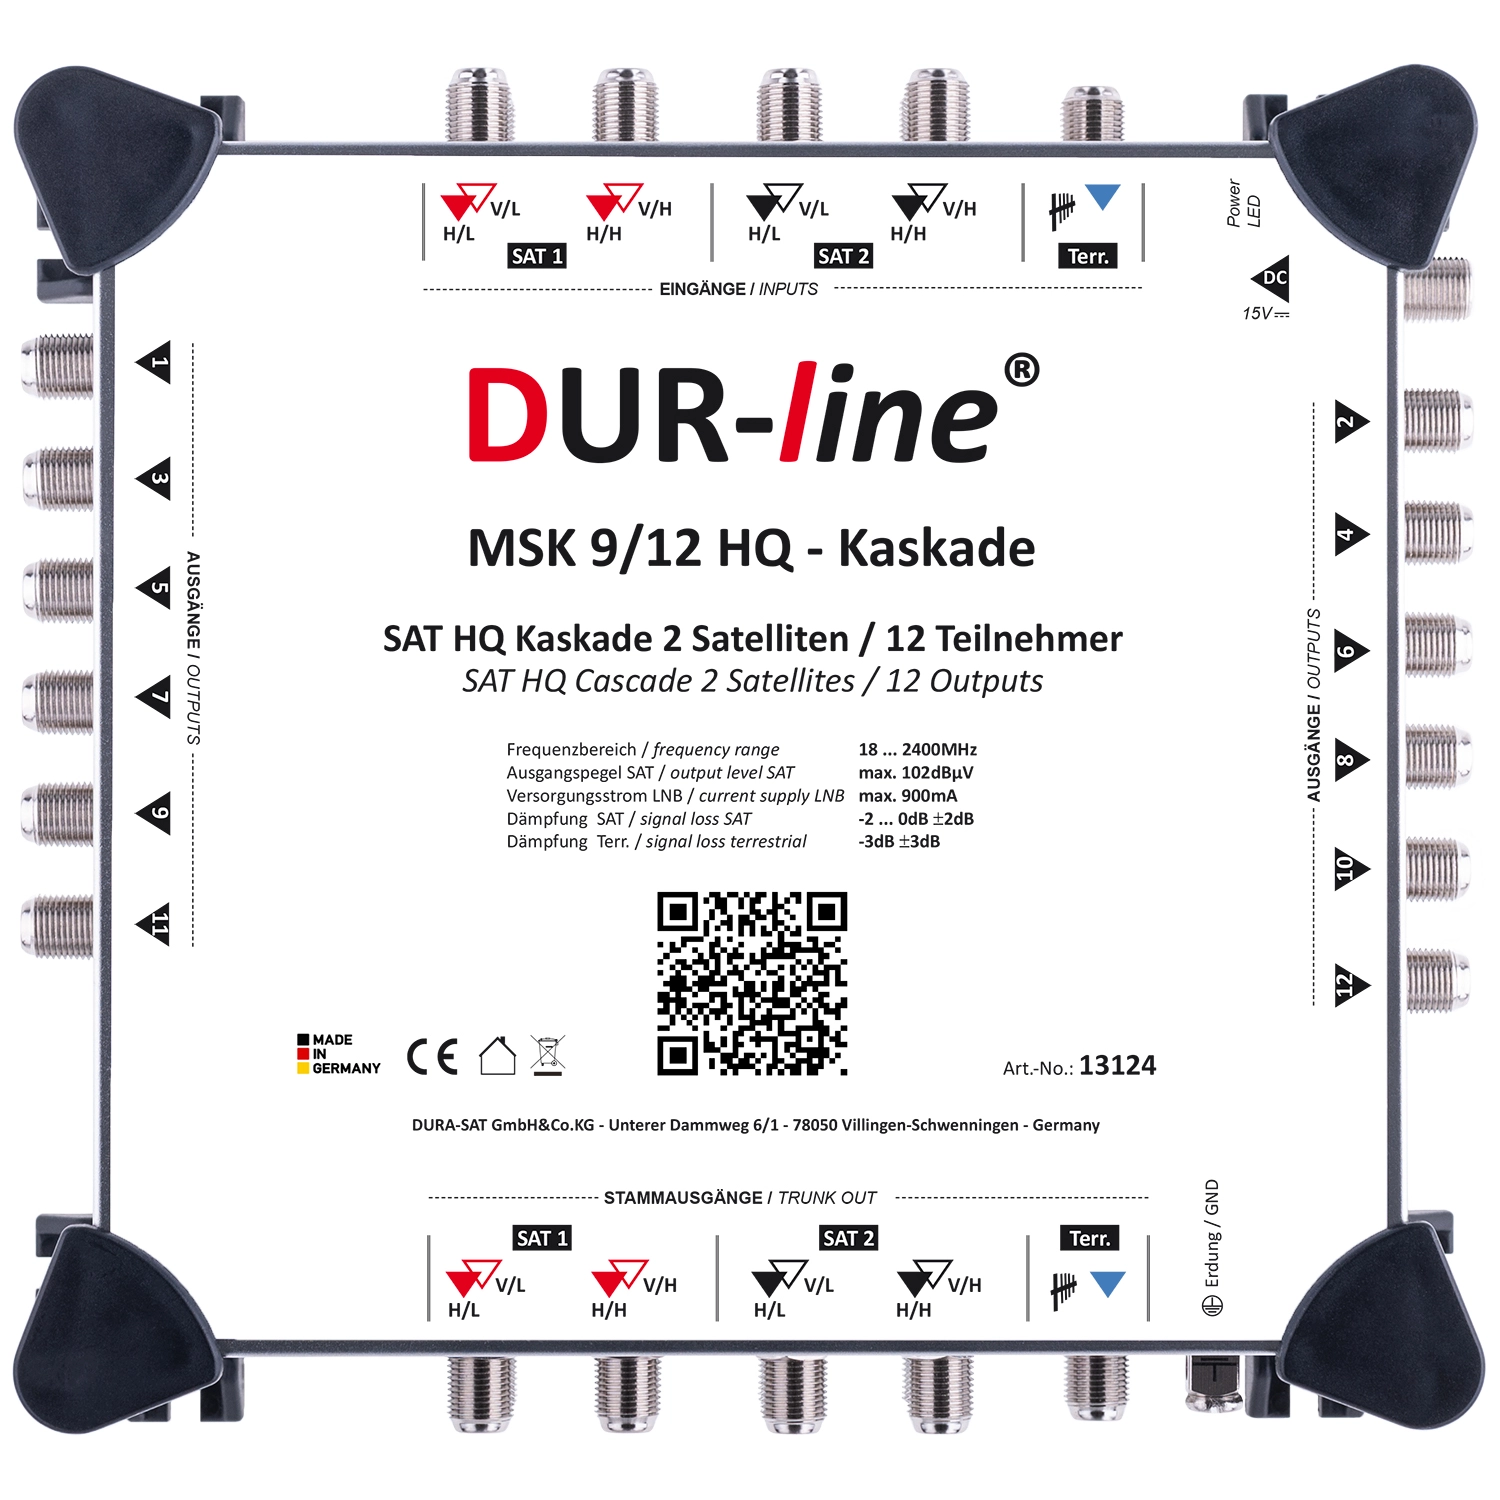 DUR-line MSK 9/12 HQ - Kaskade